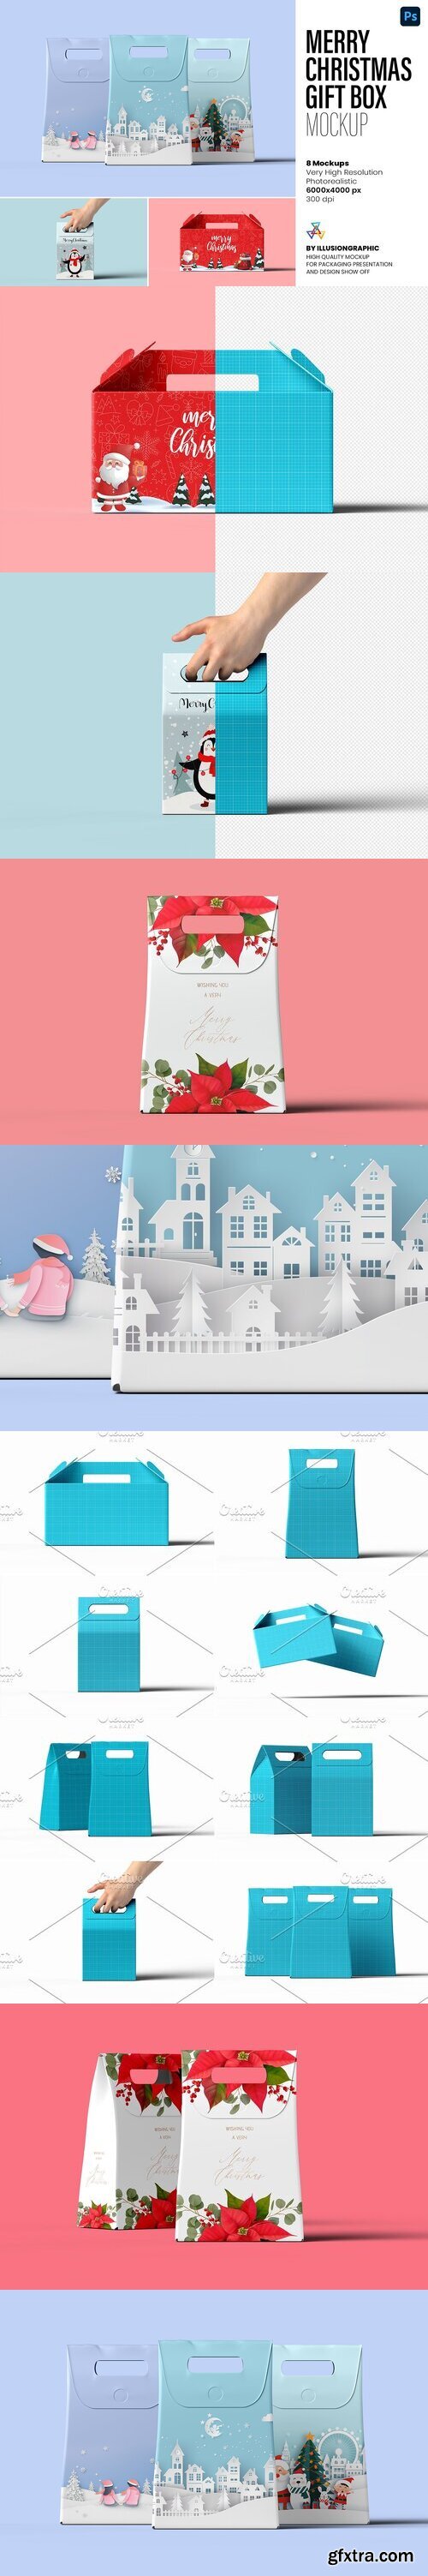 Creativemarket - Merry Christmas Gift Box Mockup 10313848